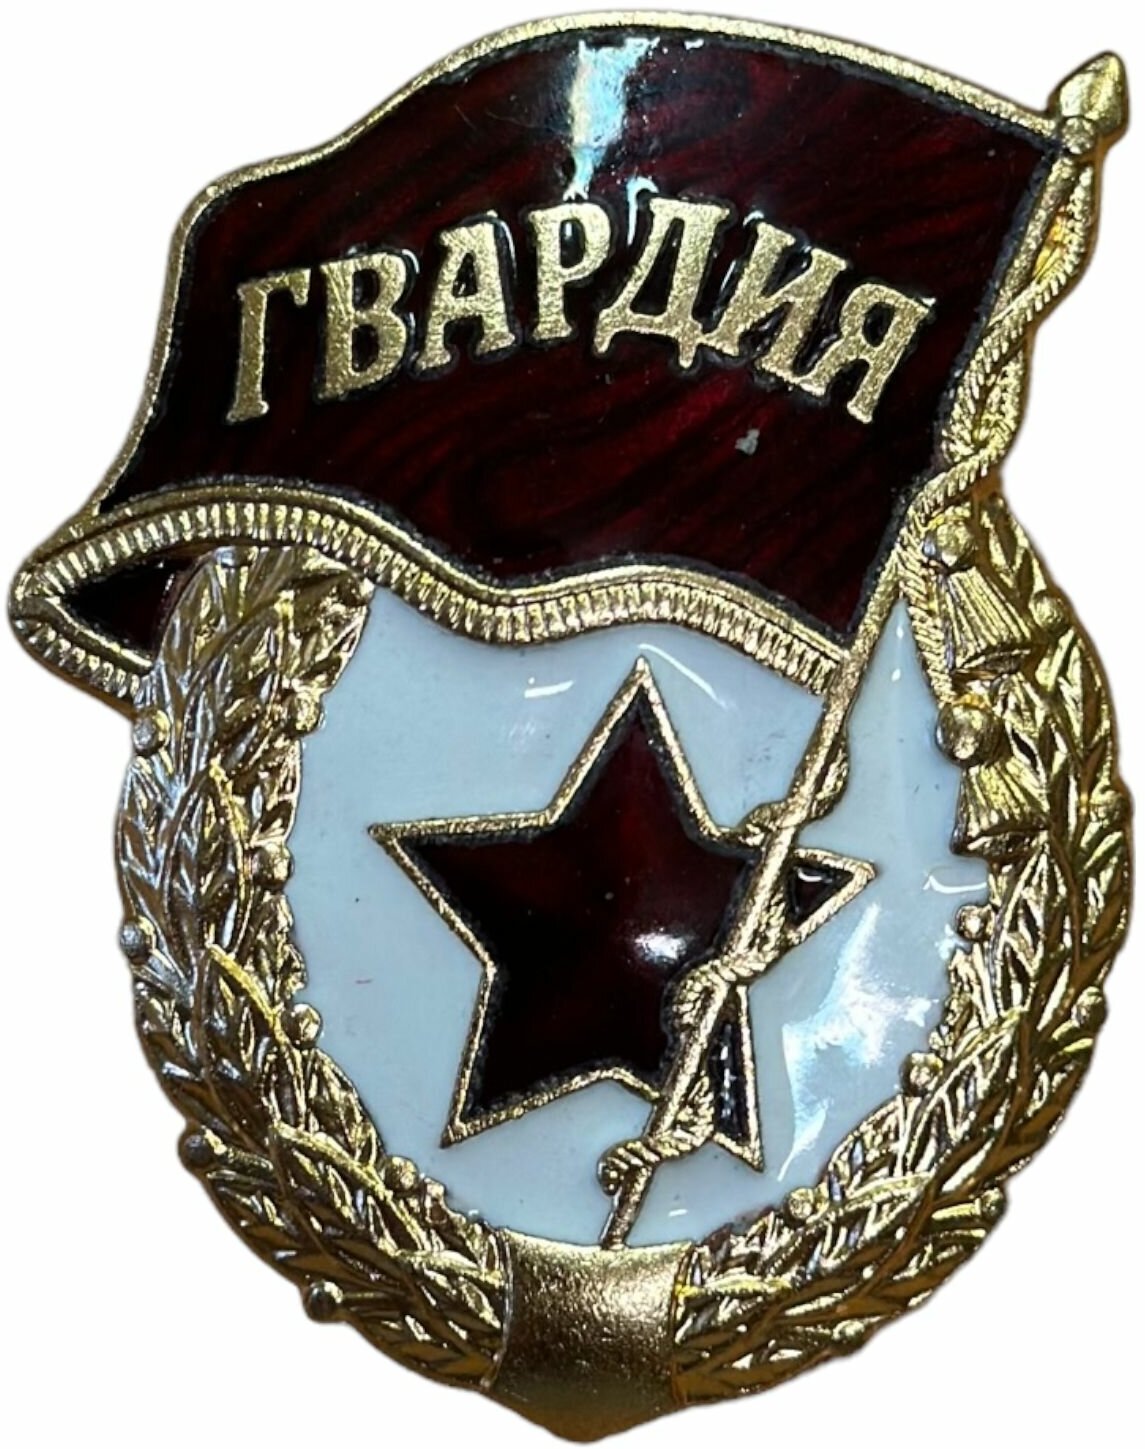 Знак Гвардия “Мосштамп” (без СССР), двойное клеймо, тяжелый, латунь